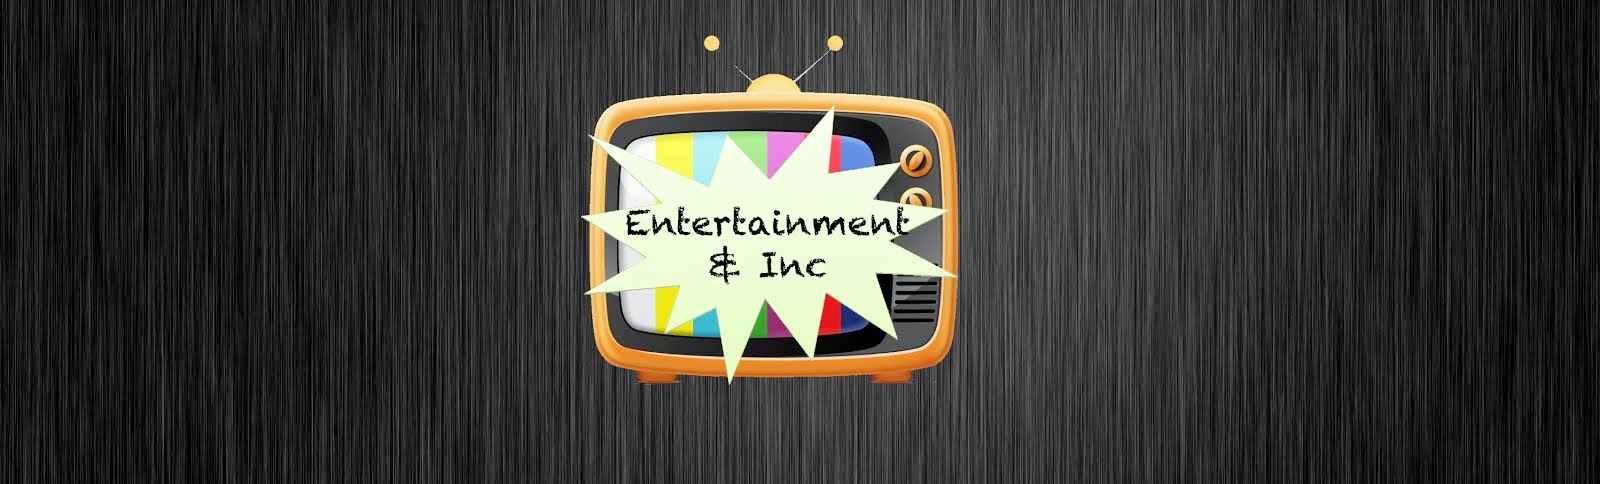 Entertainment & Inc